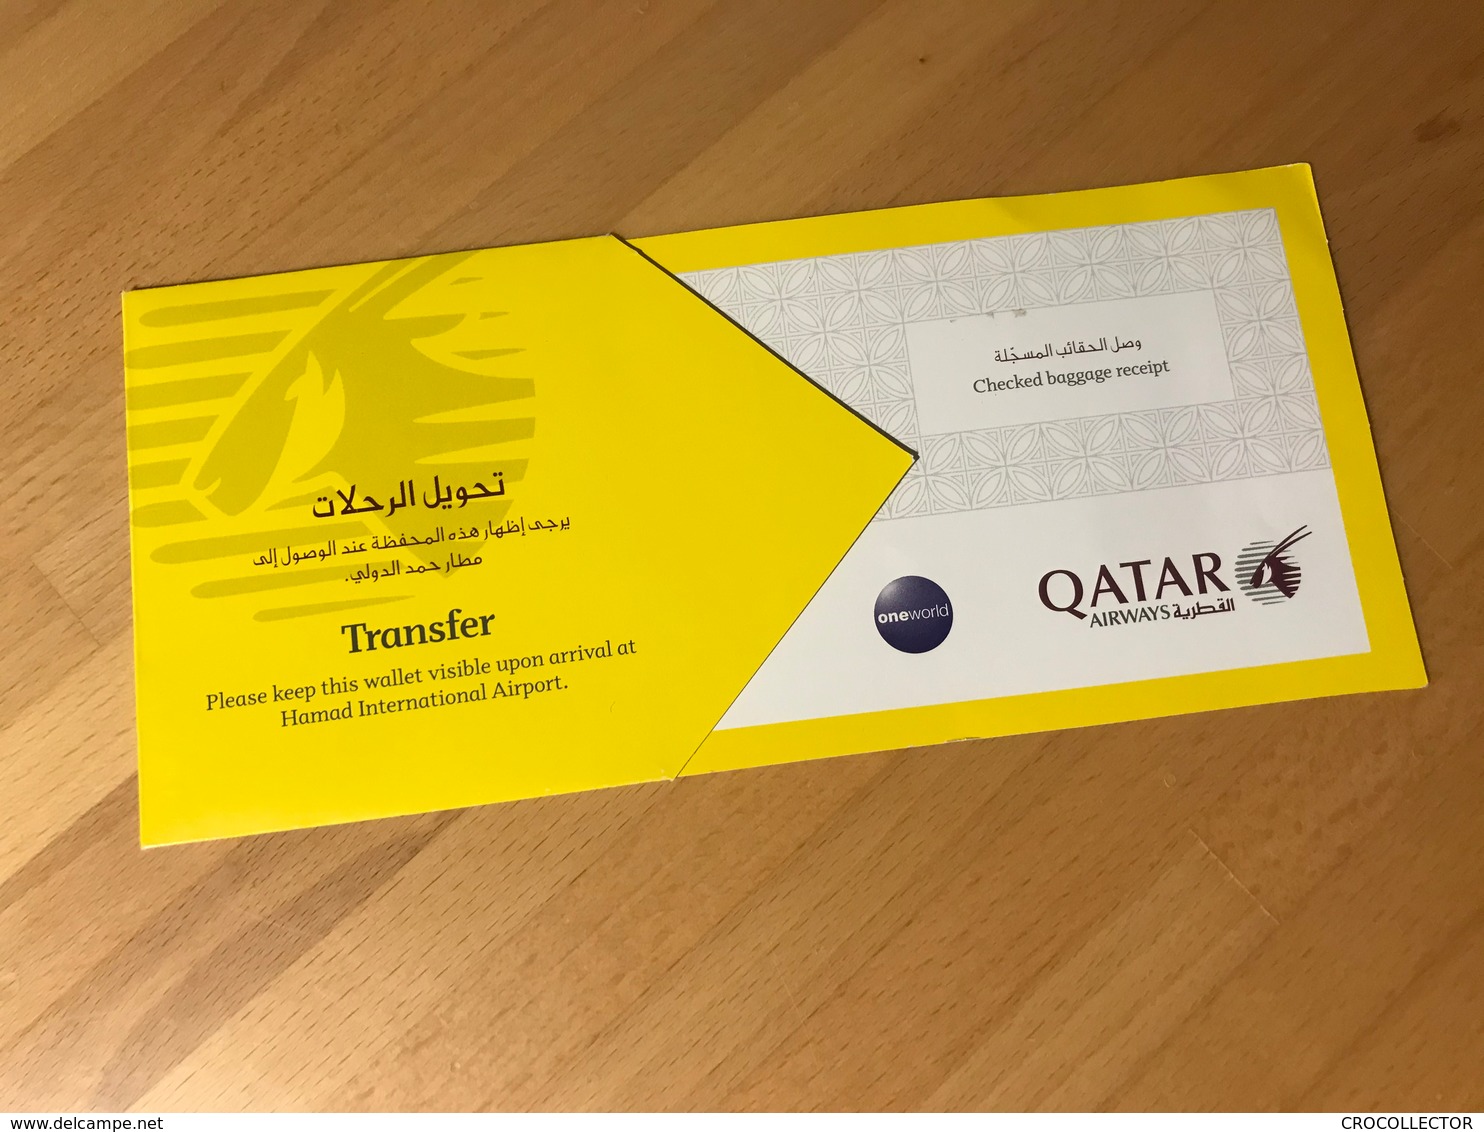 QATAR AIRWAYS ONE WORLD ECONOMY CLASS BOARDING PASS YELLOW JACKET AT HAMAD INTERNATIONAL AIRPORT DOHA - Papiere